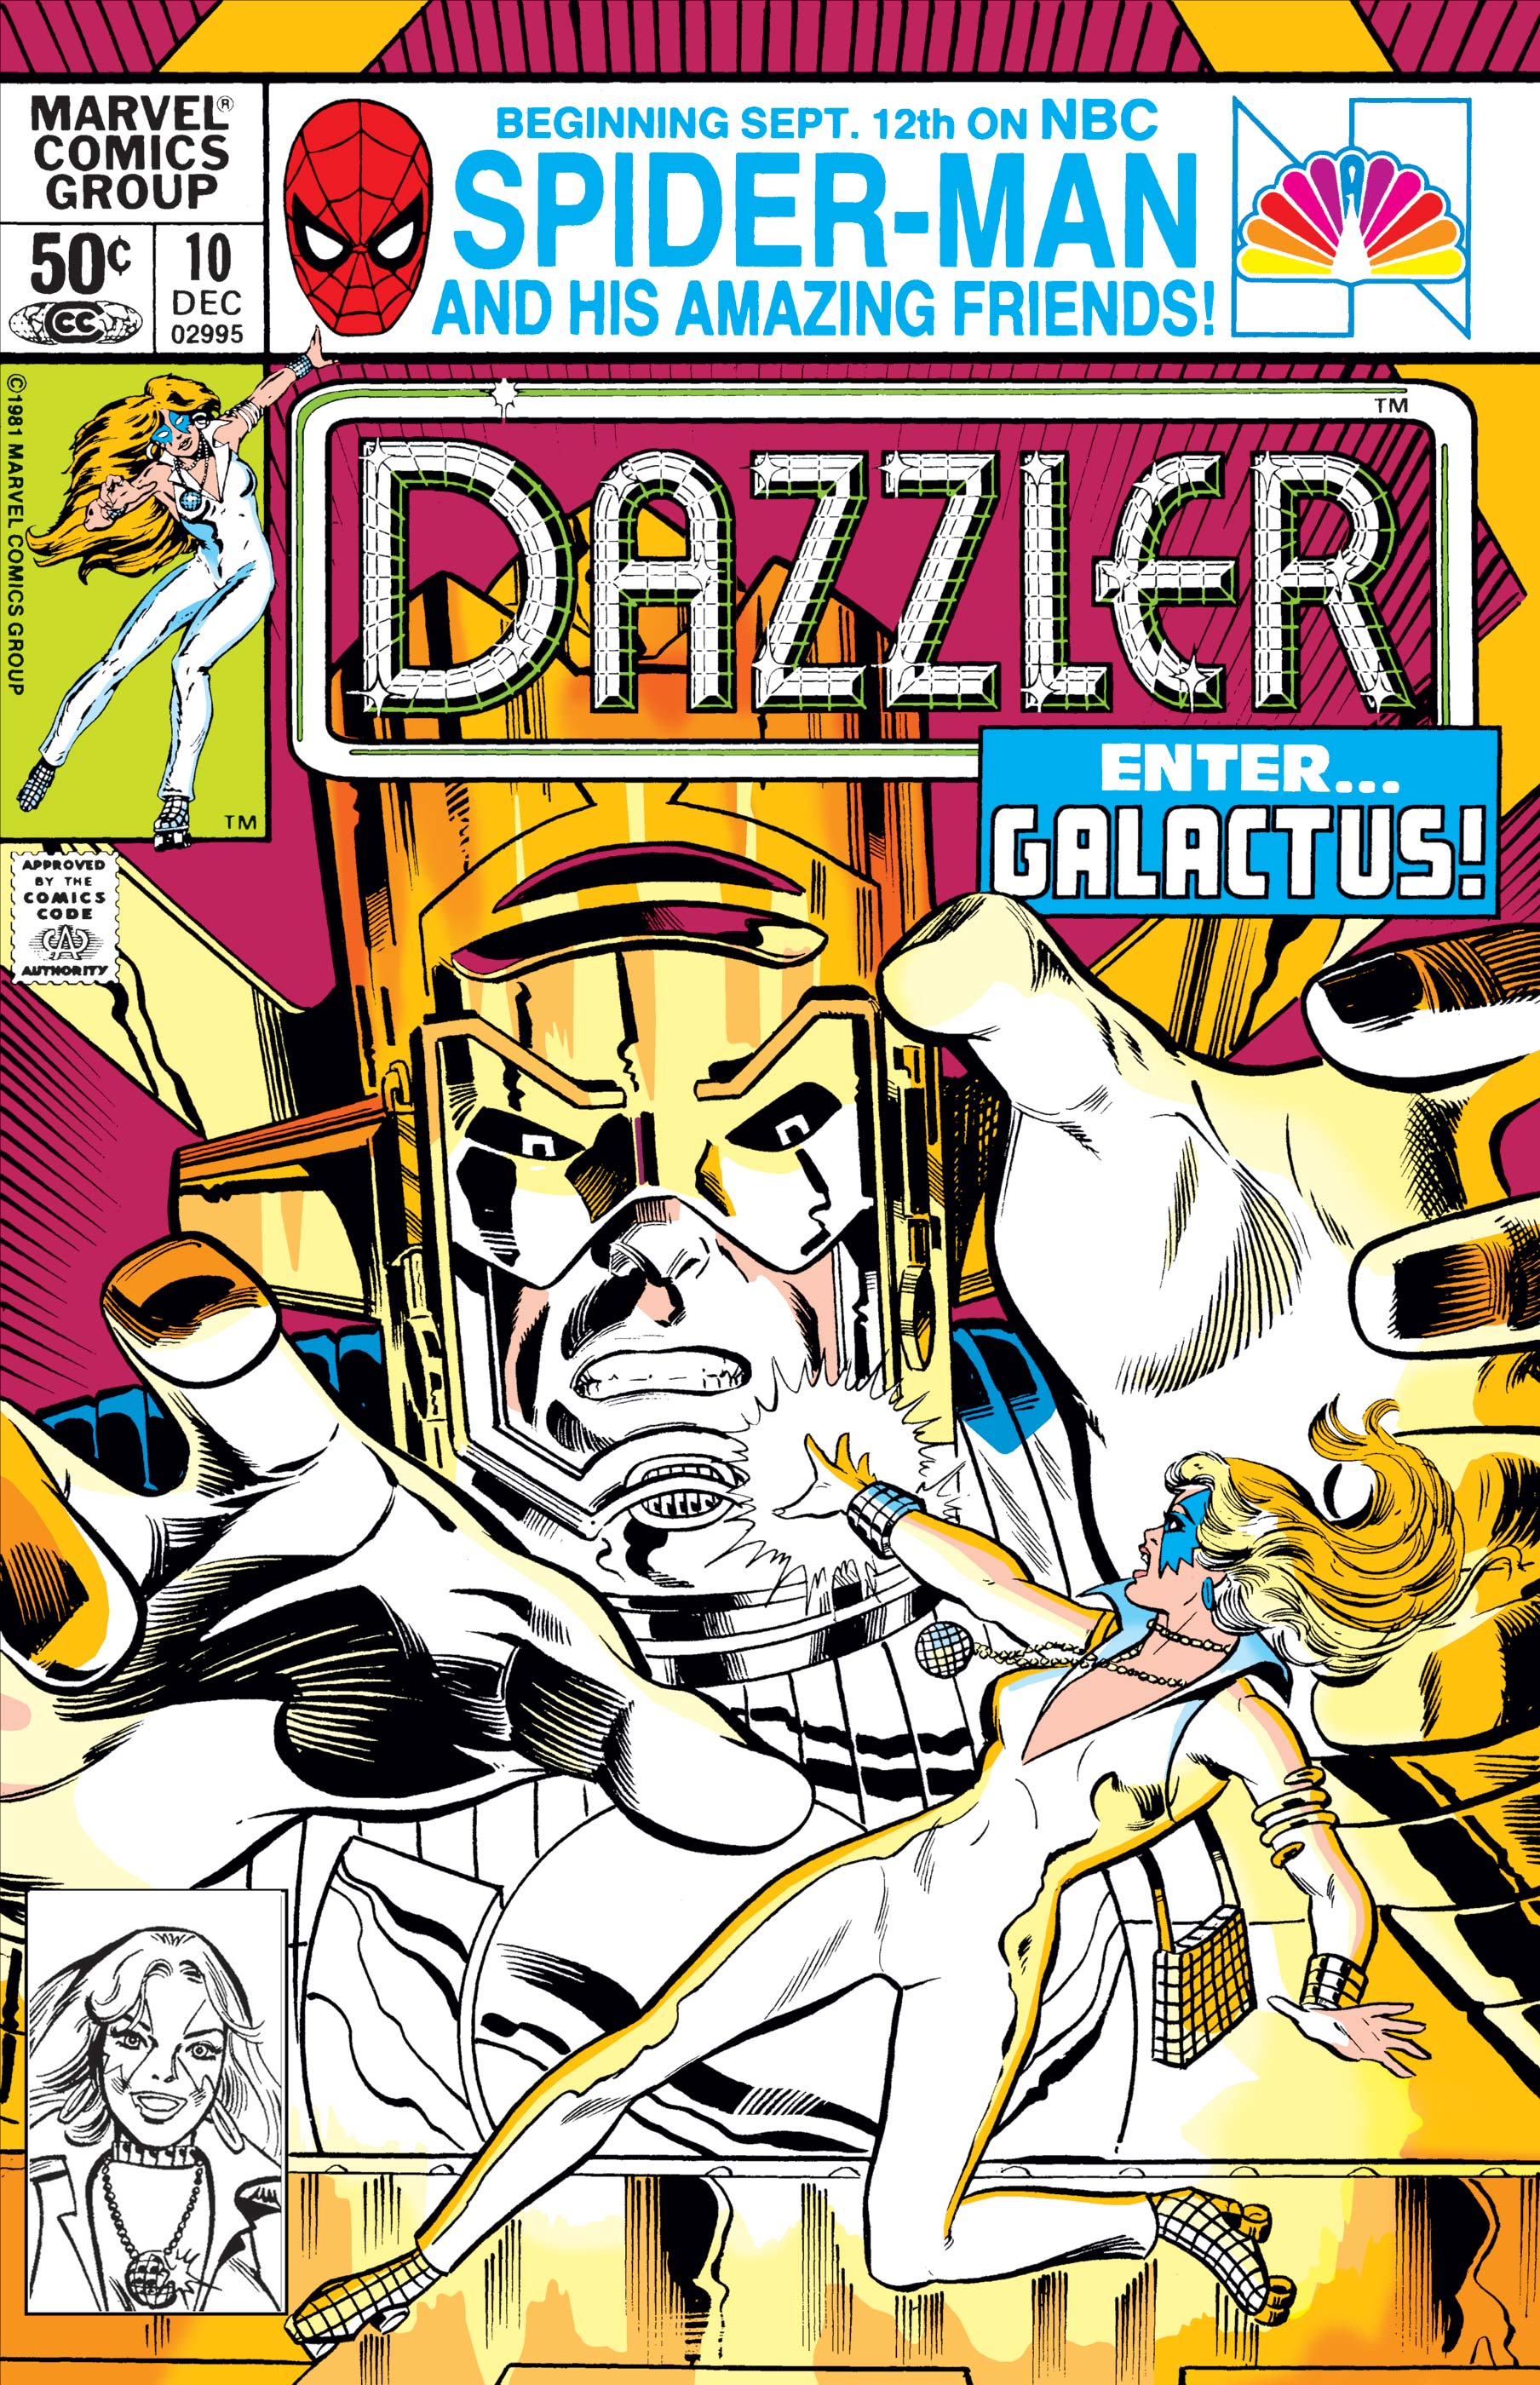 Dazzler (1981) #10